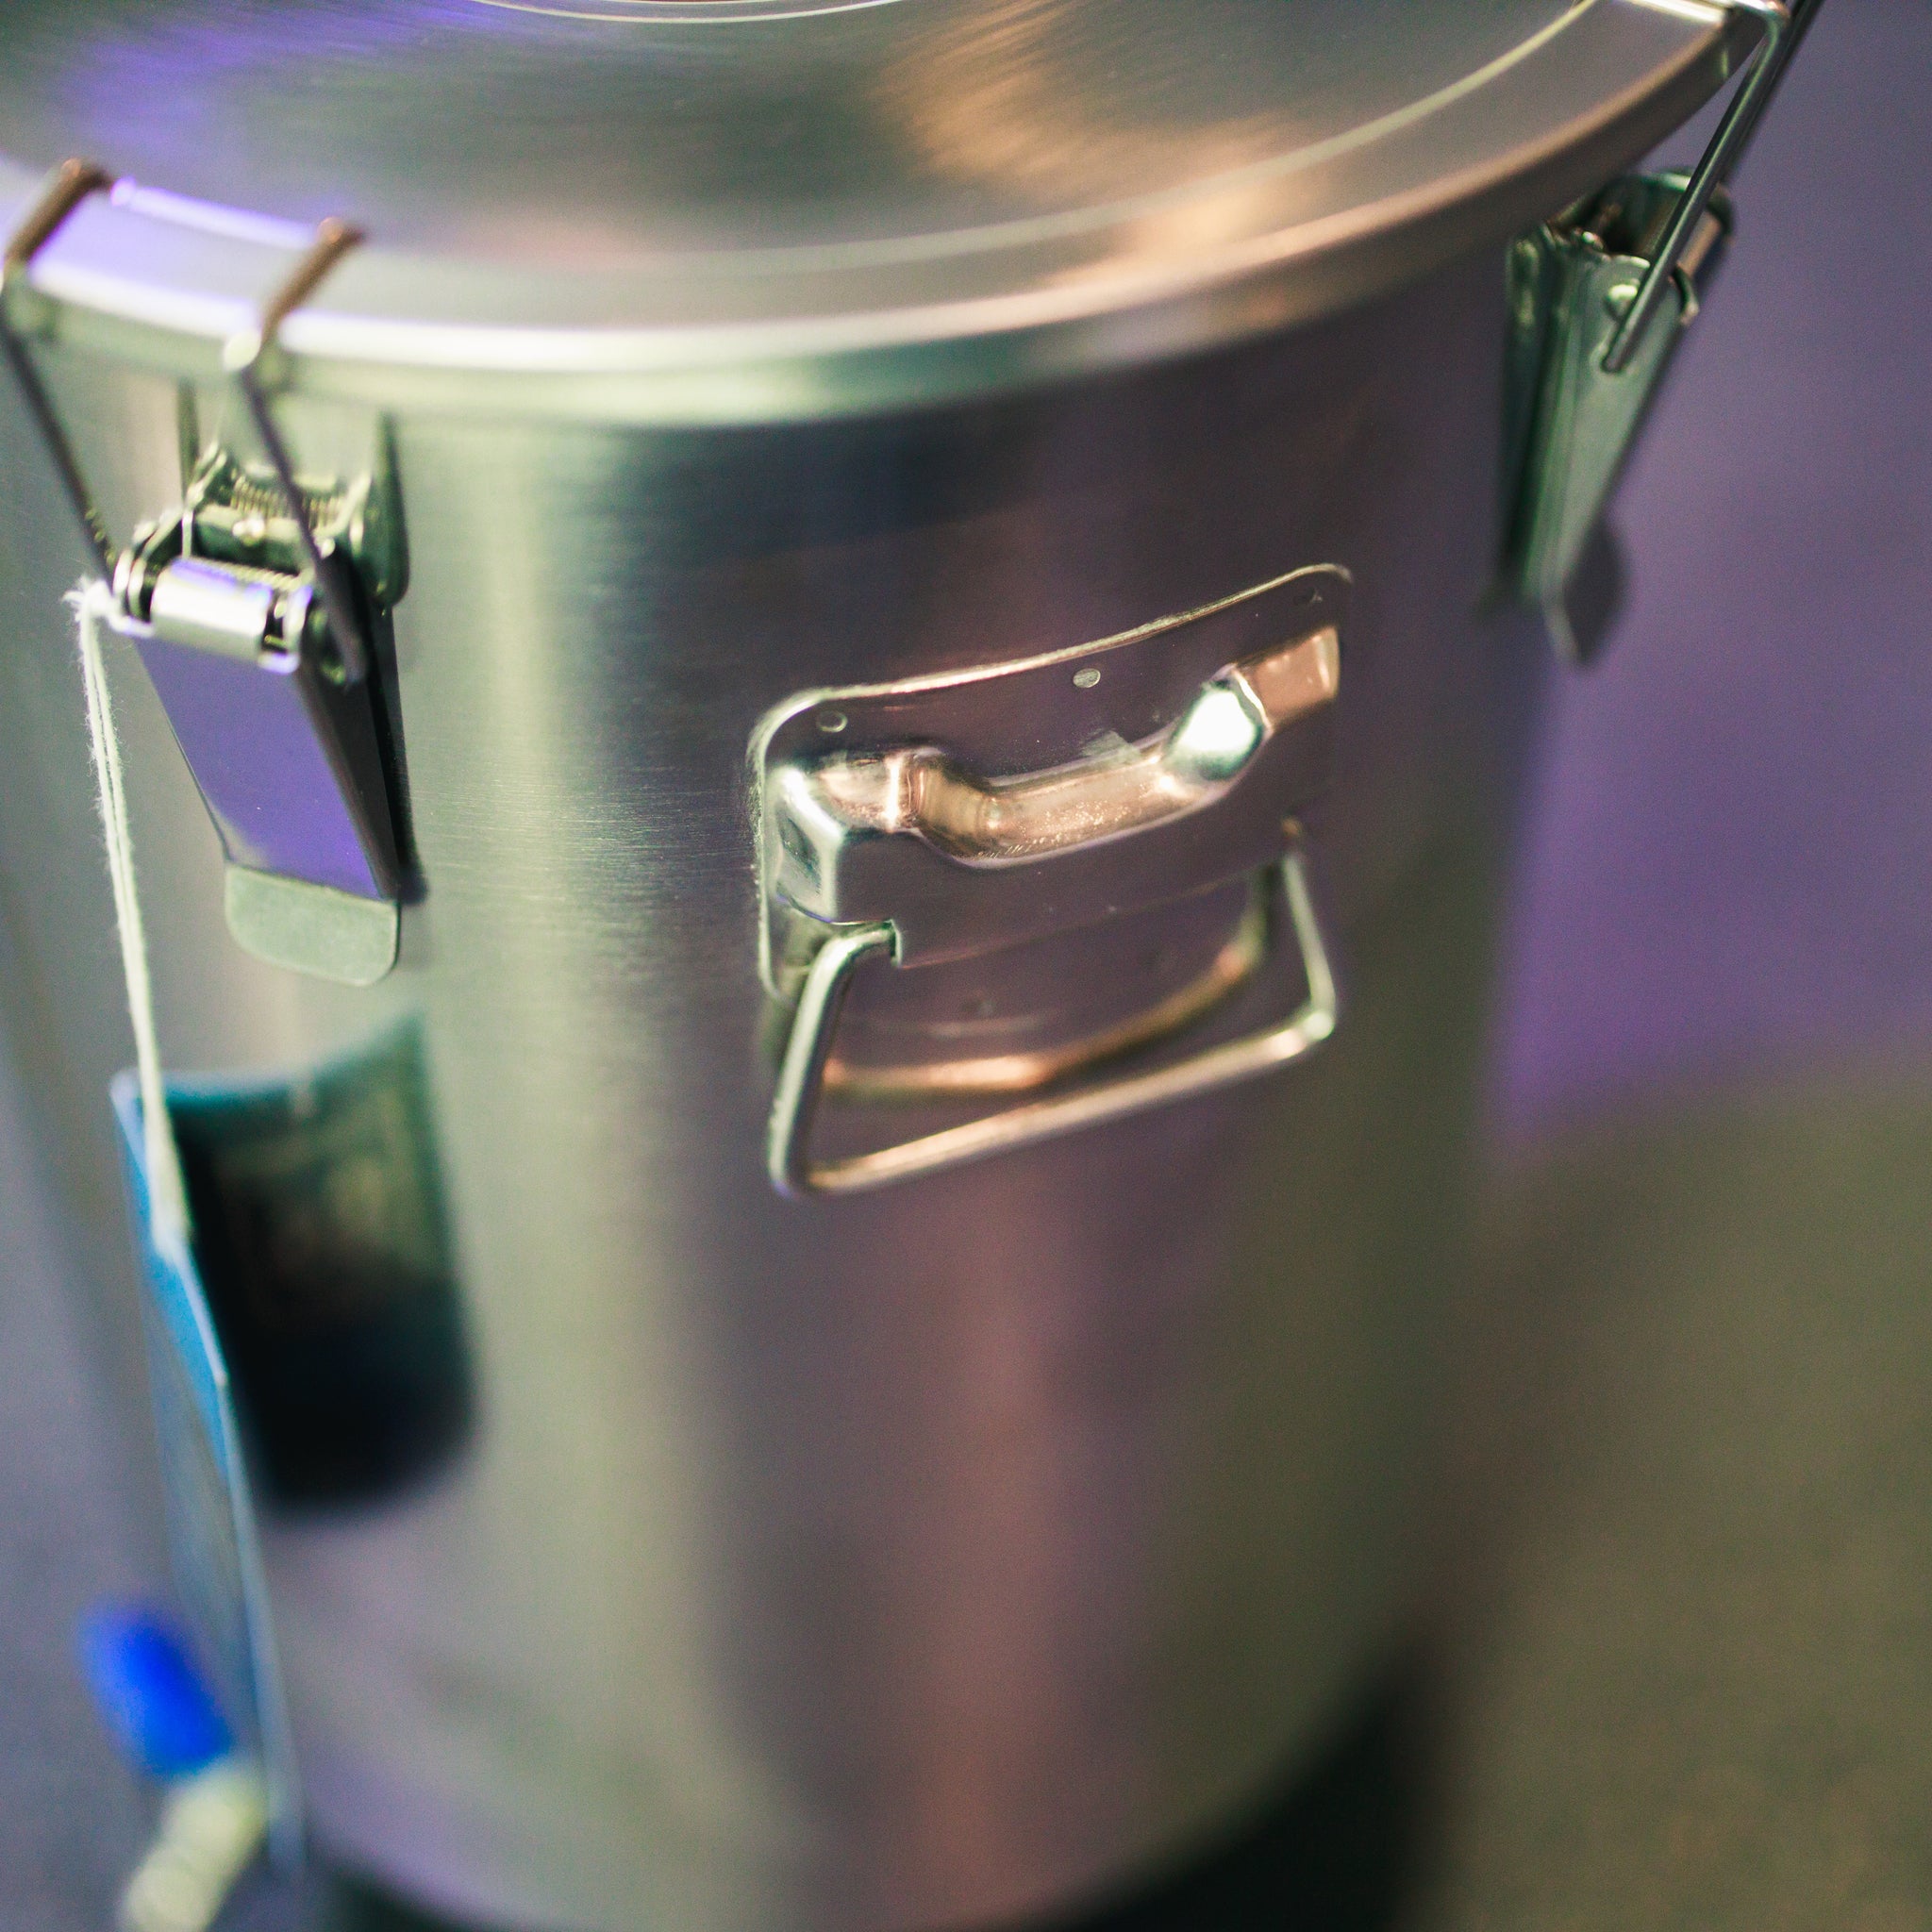 3.5 gal  Brew Bucket Mini - Ss Brewtech